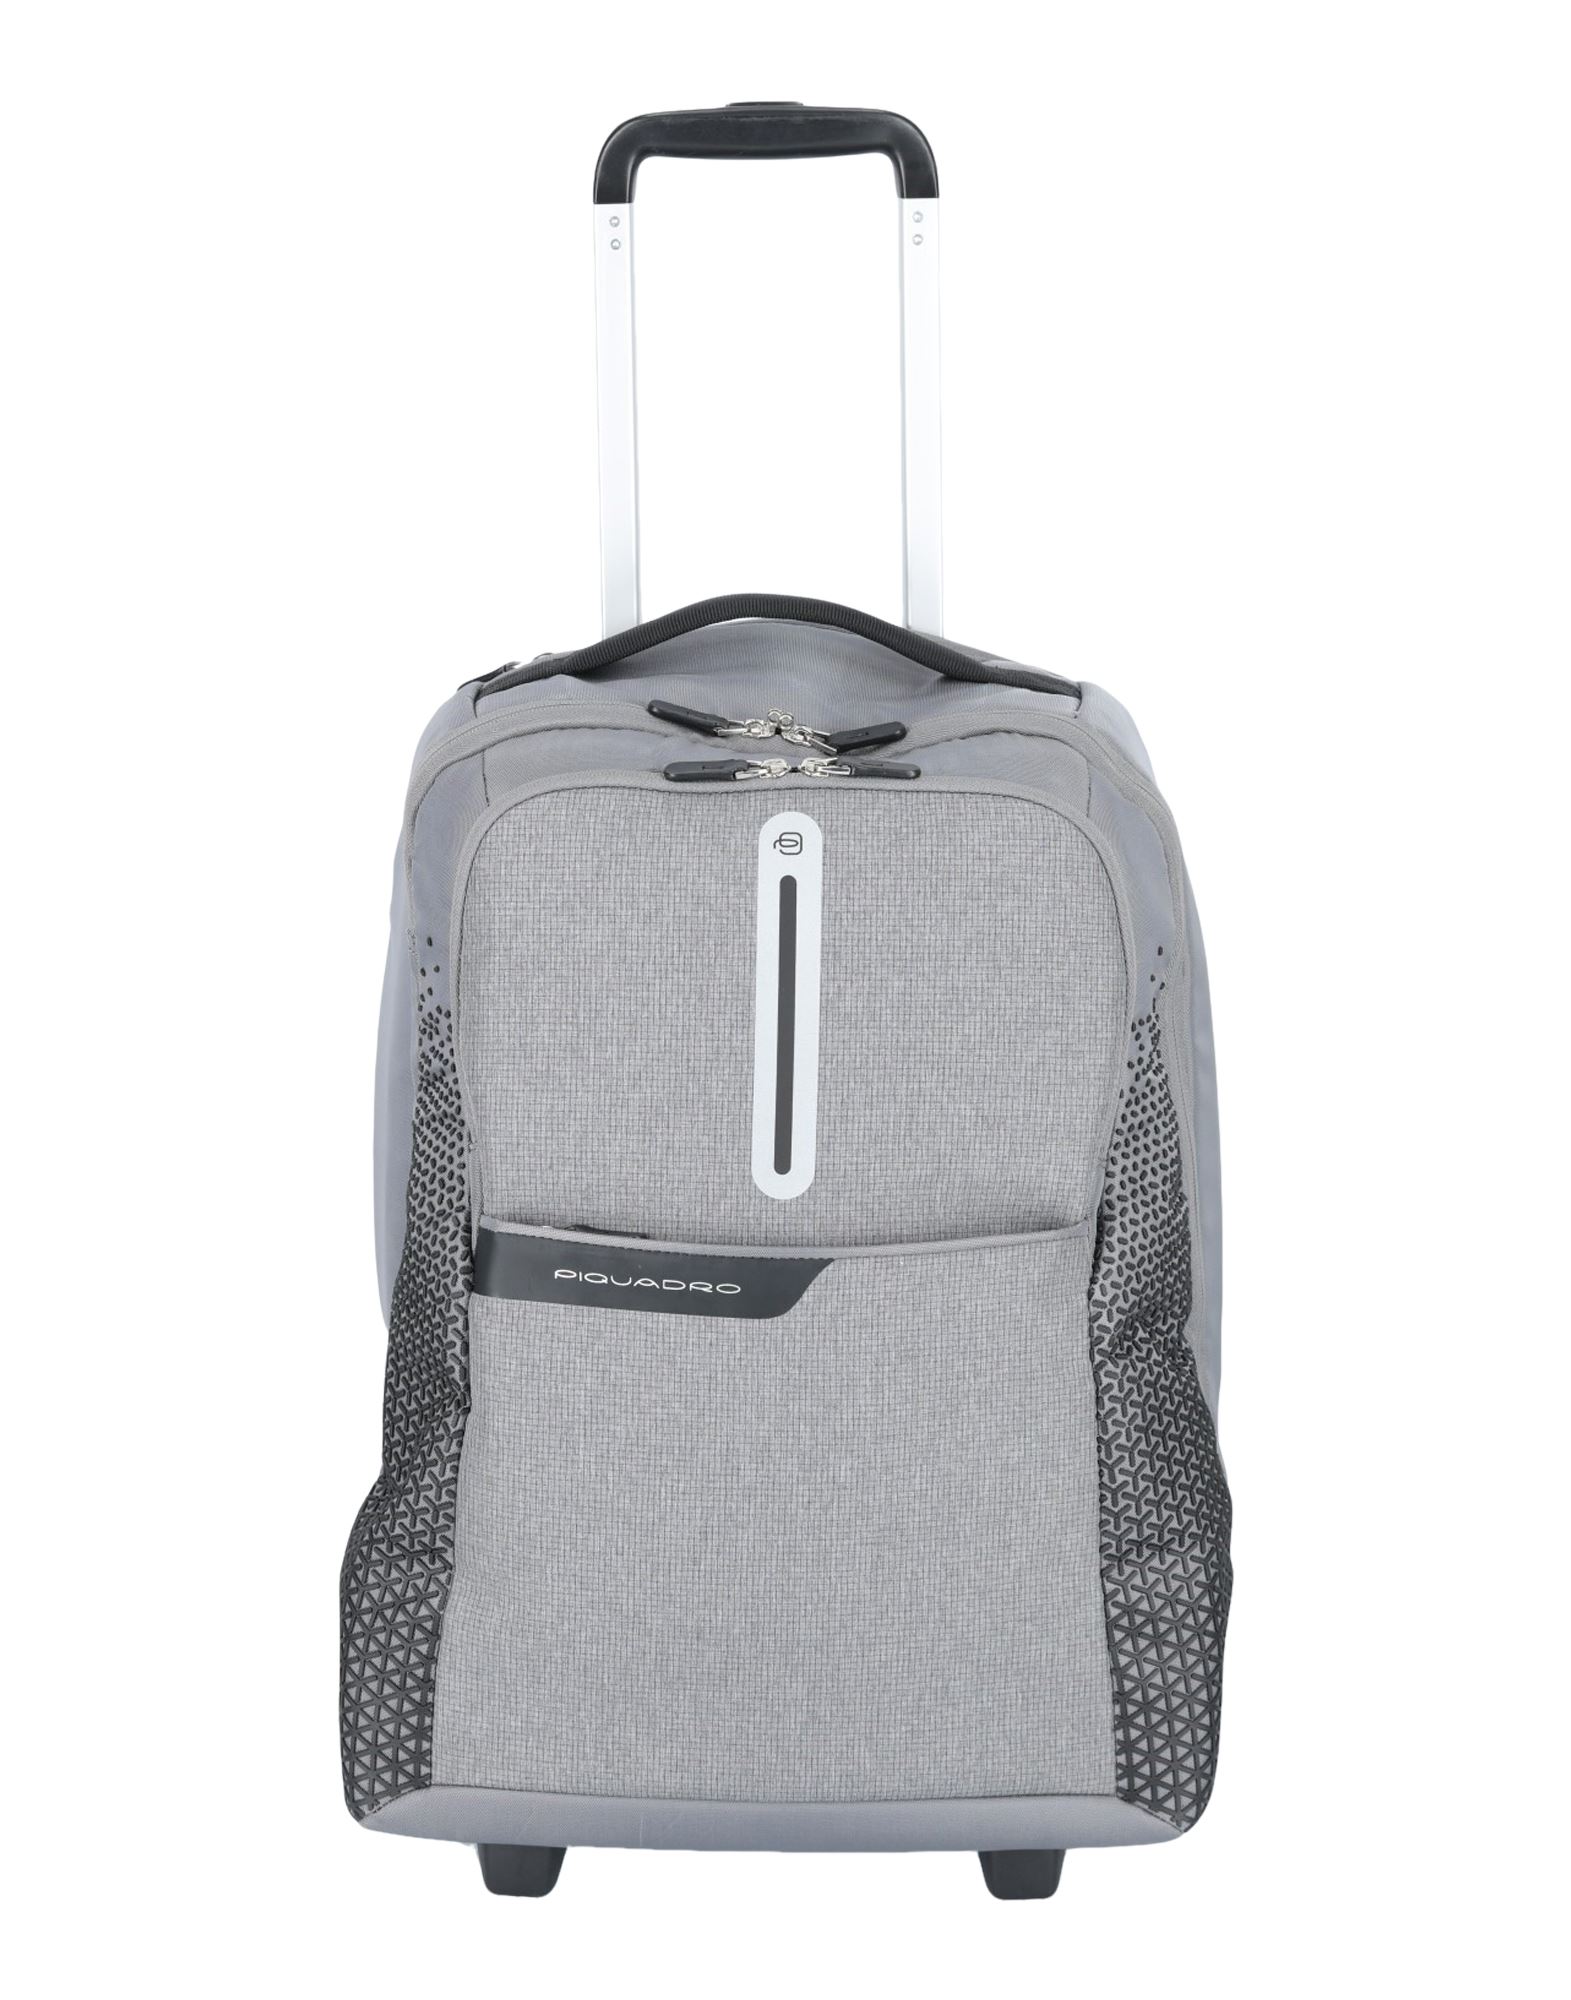 Piquadro Wheeled Luggage In Grey